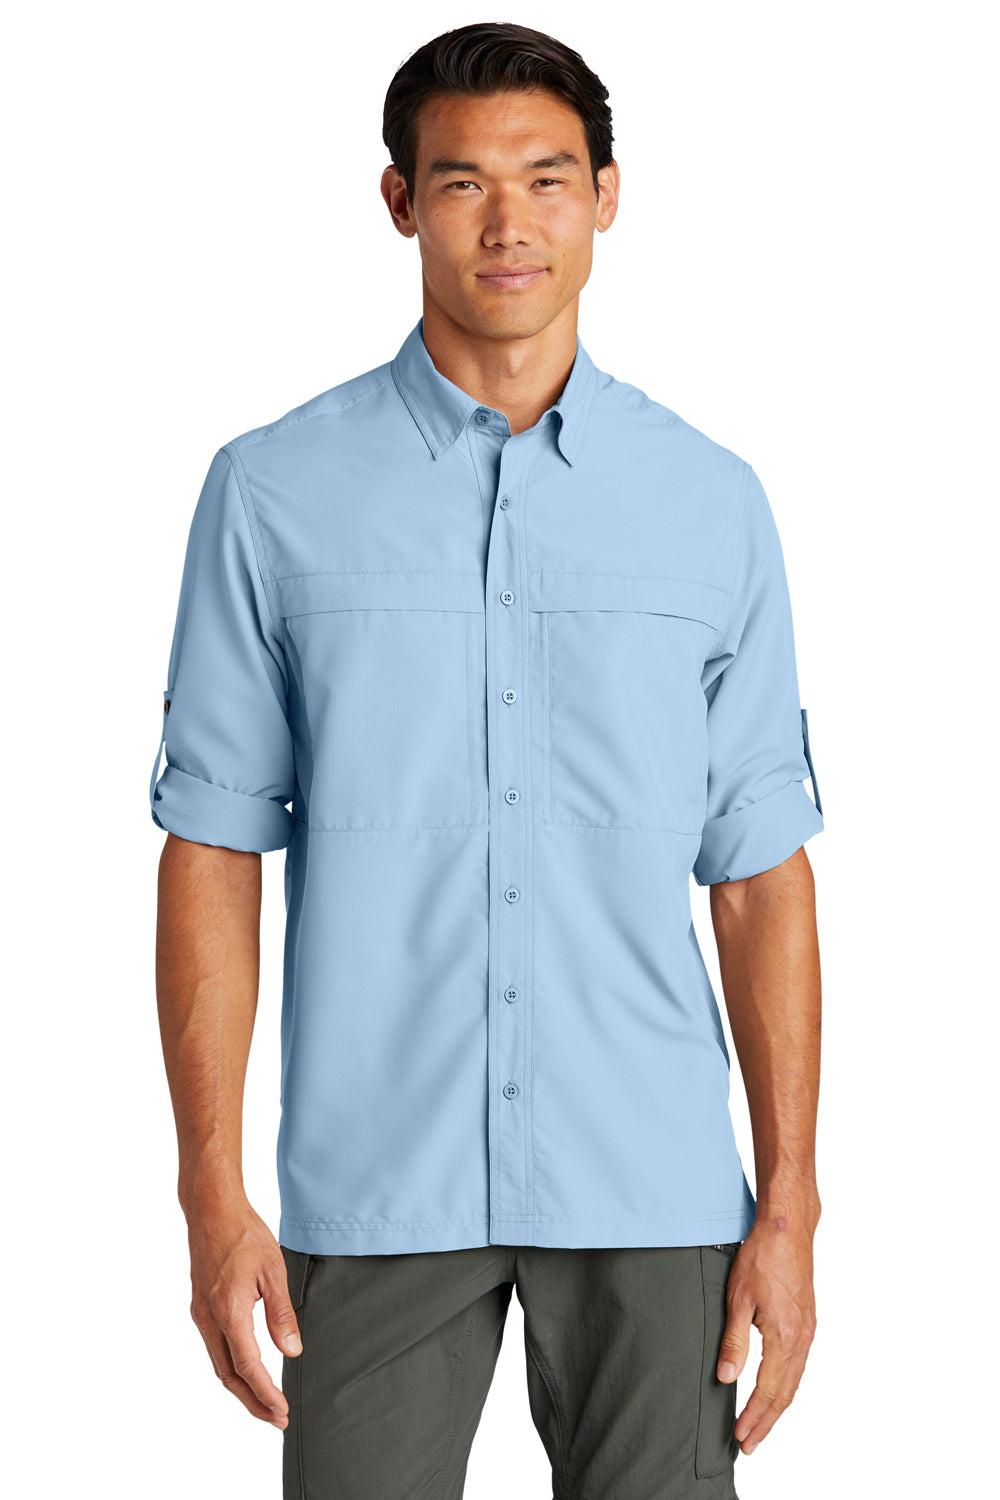 Port Authority W960 UV Daybreak Long Sleeve Button Down Shirt Light Blue 3Q